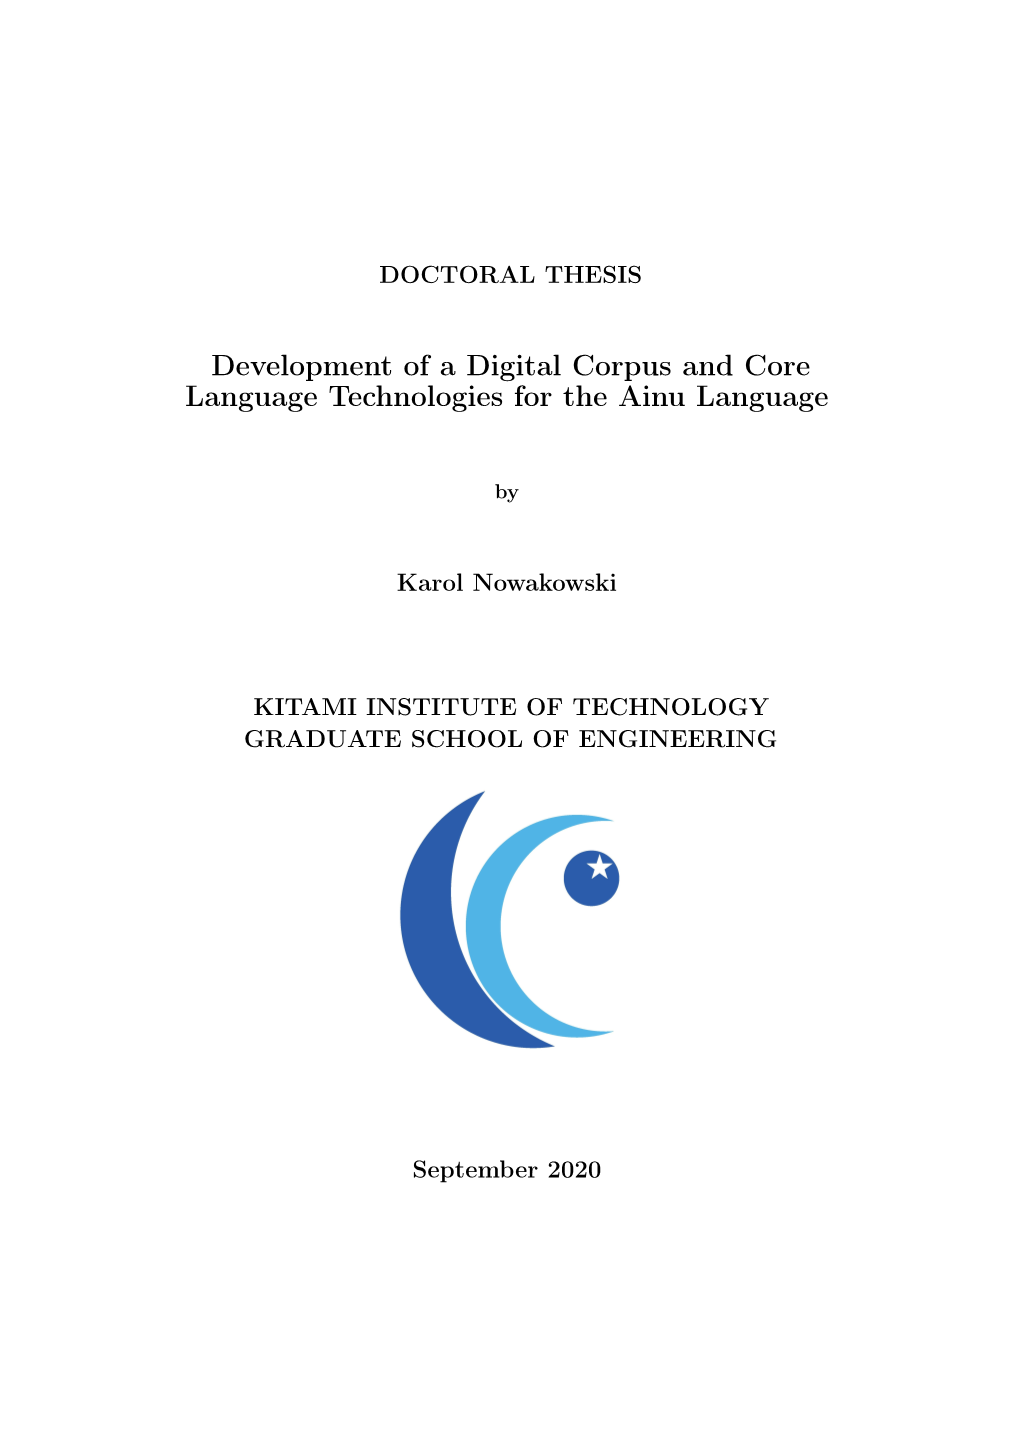 Development of a Digital Corpus and Core Language Technologies for the Ainu Language